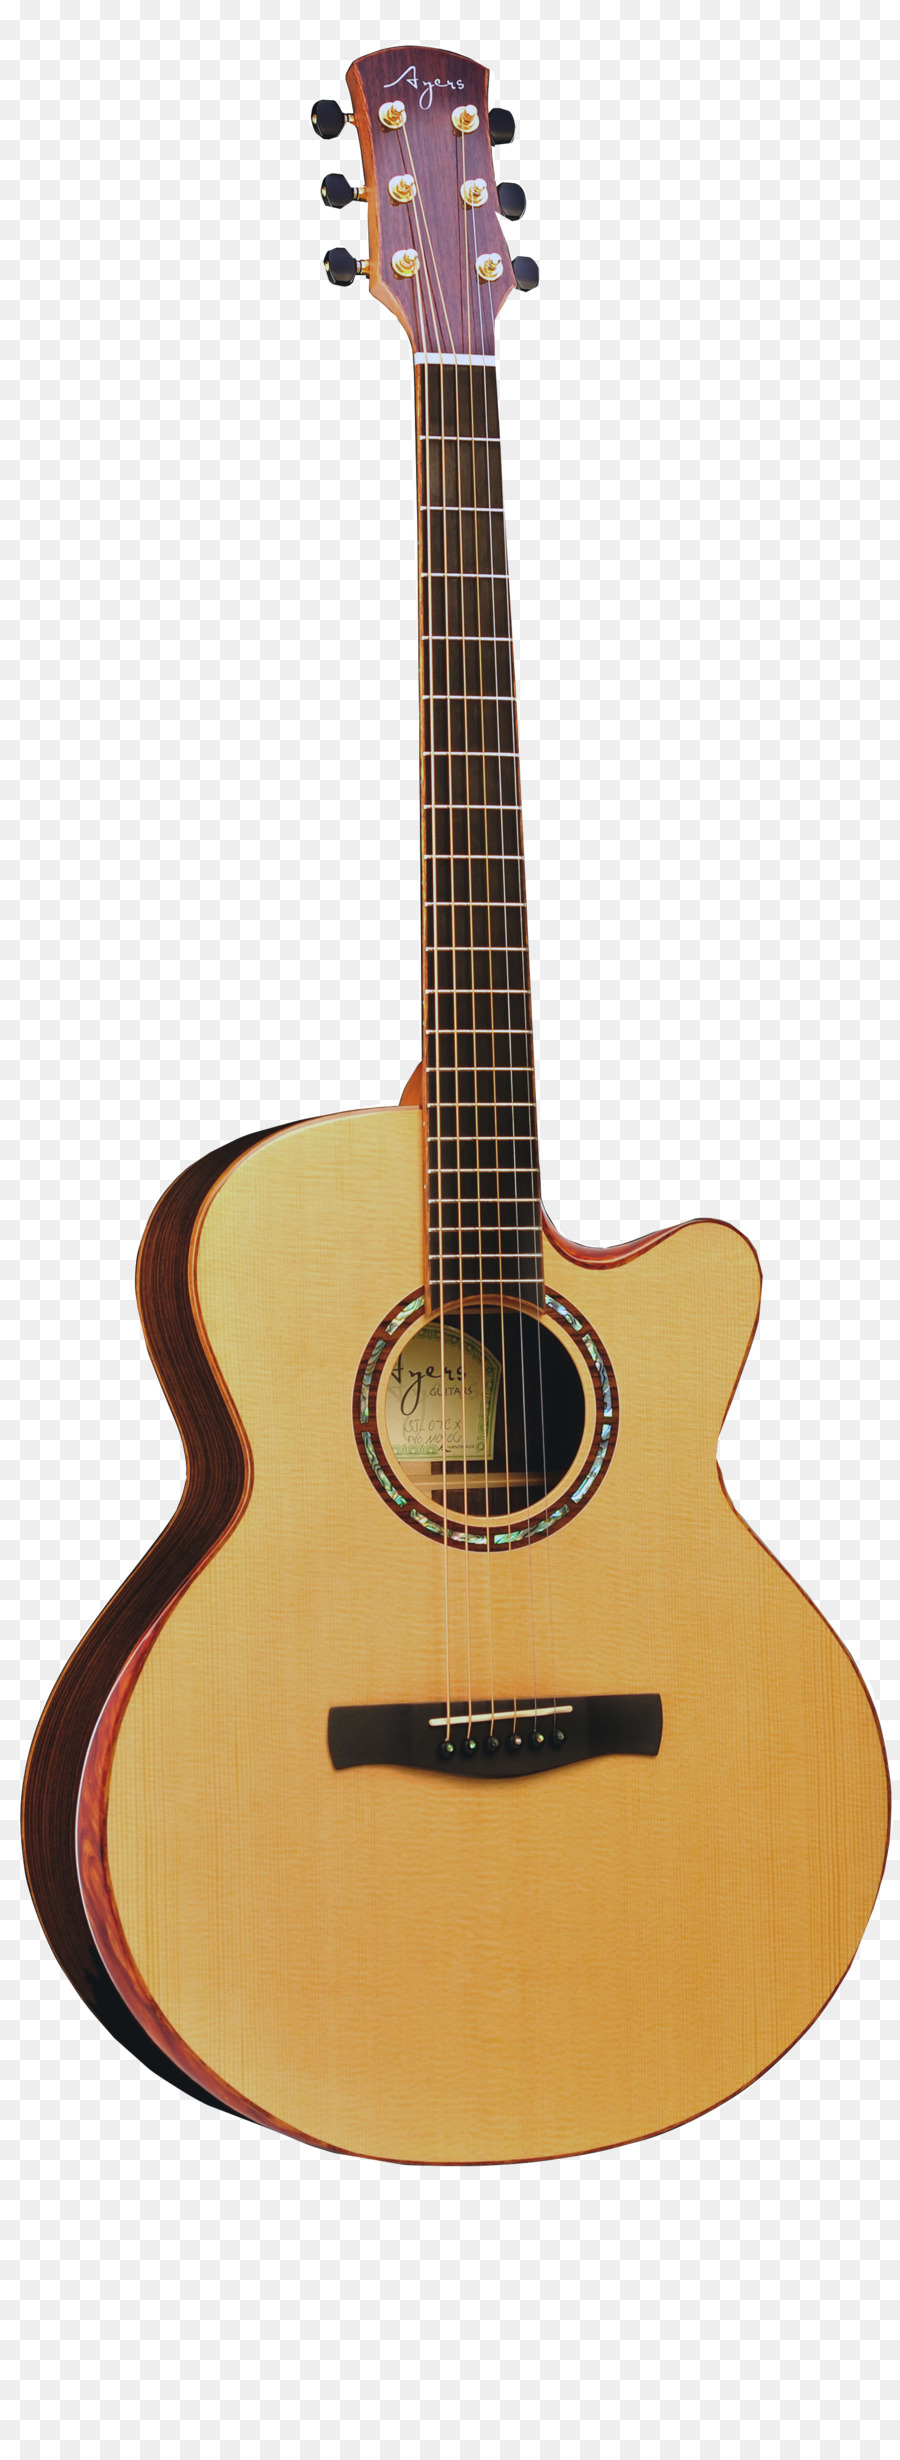 Akustik-Elektro Gitarre Fender Musical Instruments Corporation Dreadnought Akustik-Gitarre - handgemachte japanische Instrumente